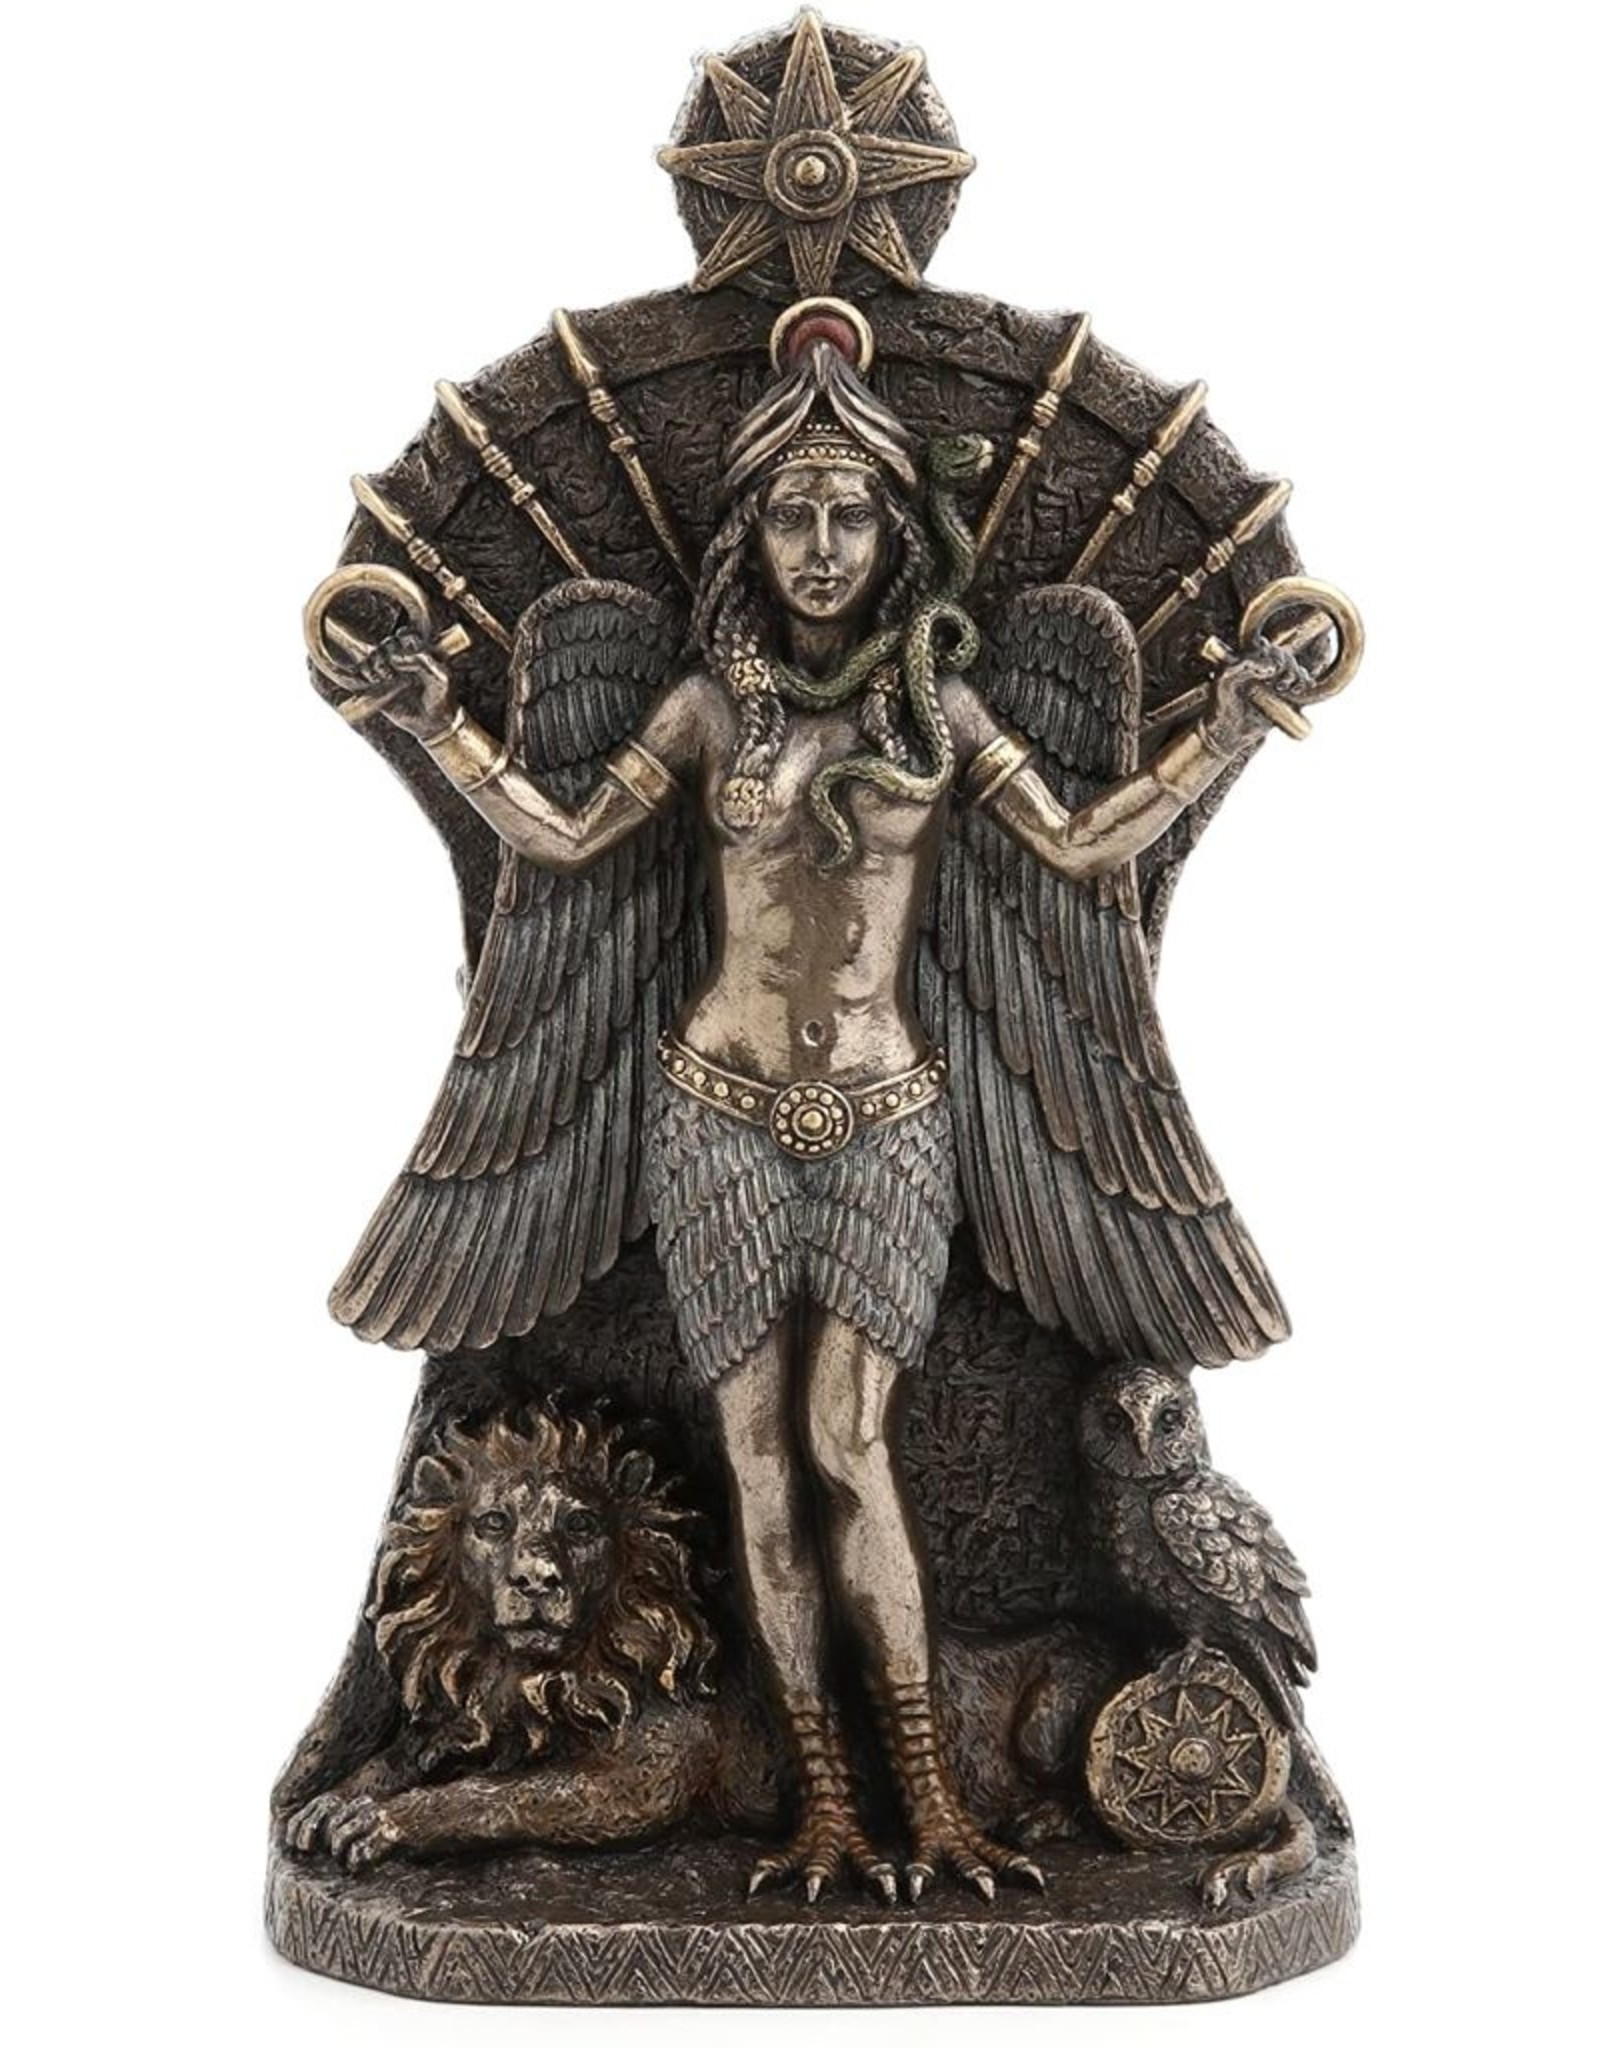 Veronese Design Veronese Design - Ishtar - Goddess of Love, War and Sex